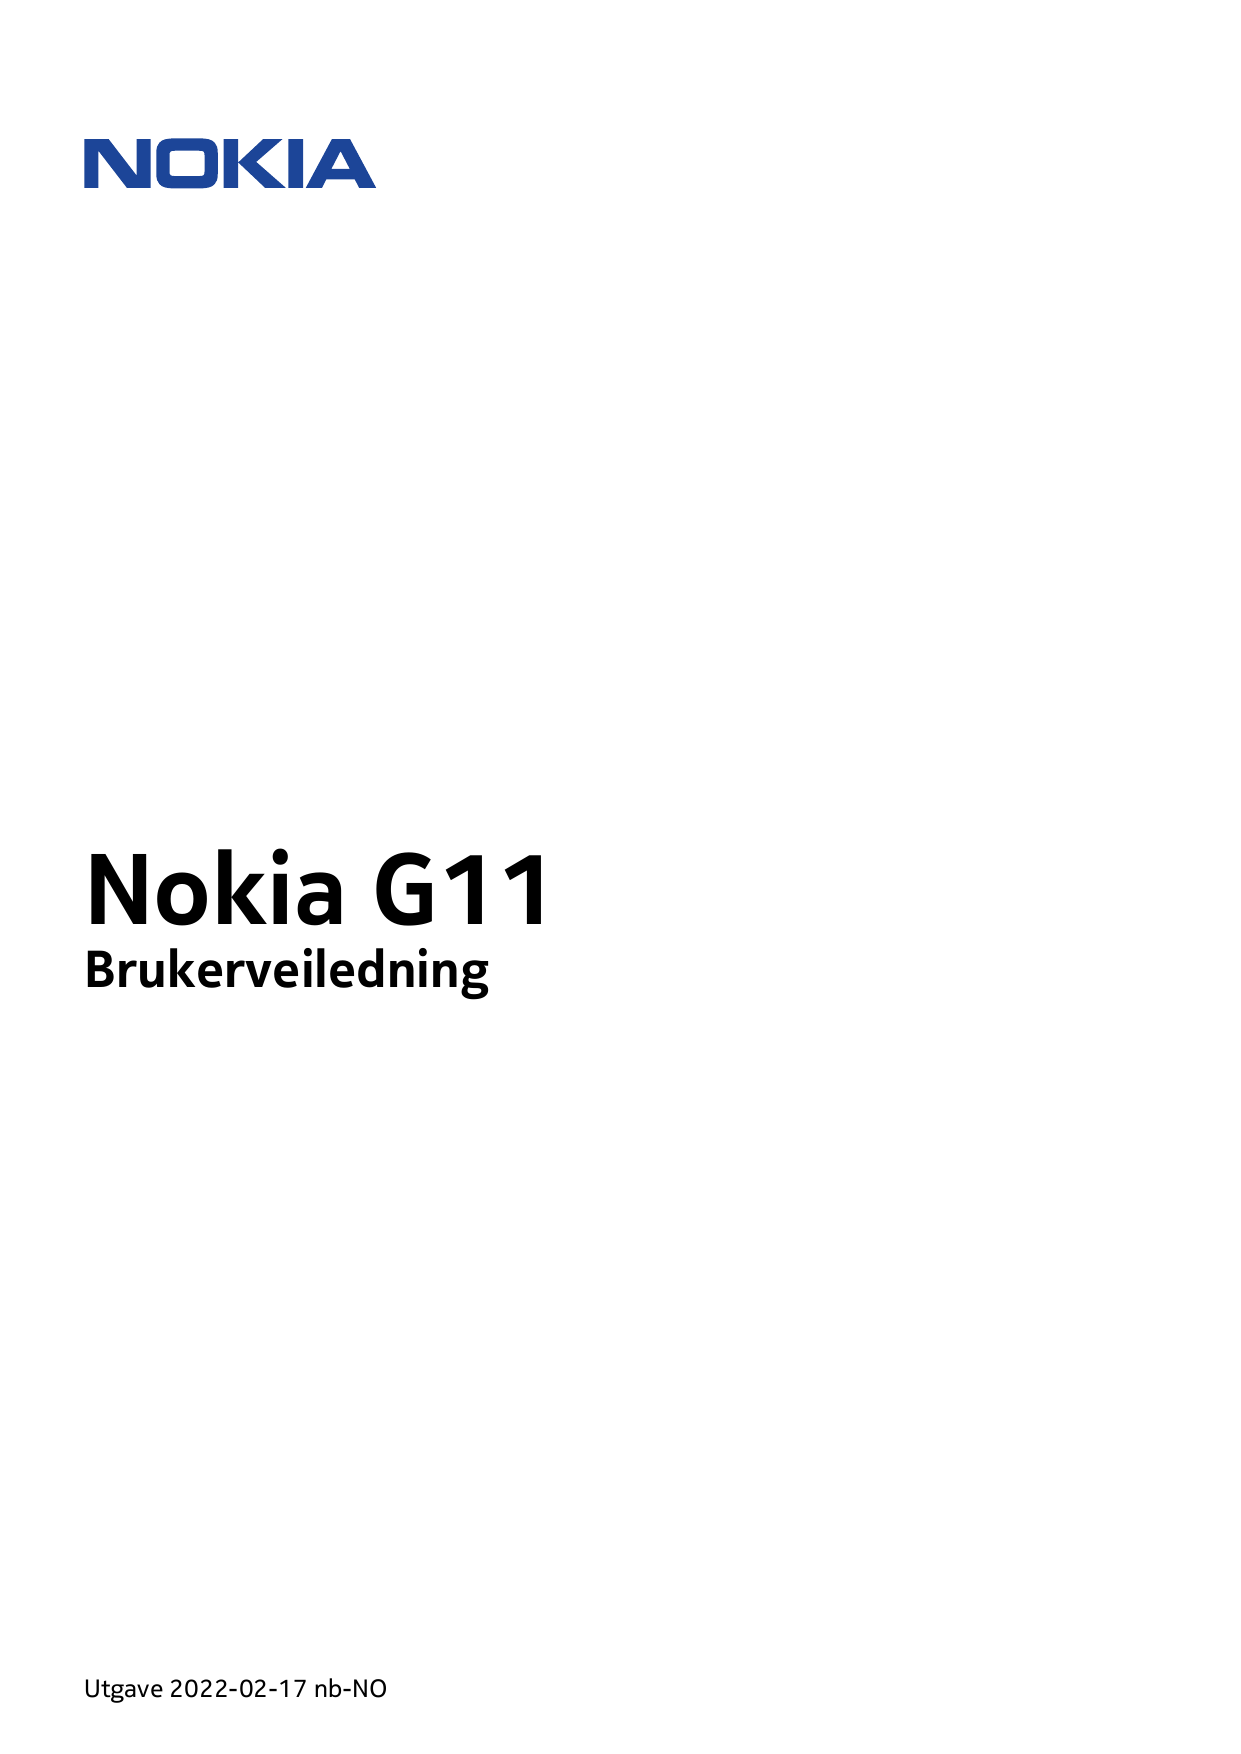 Nokia G11BrukerveiledningUtgave 2022-02-17 nb-NO